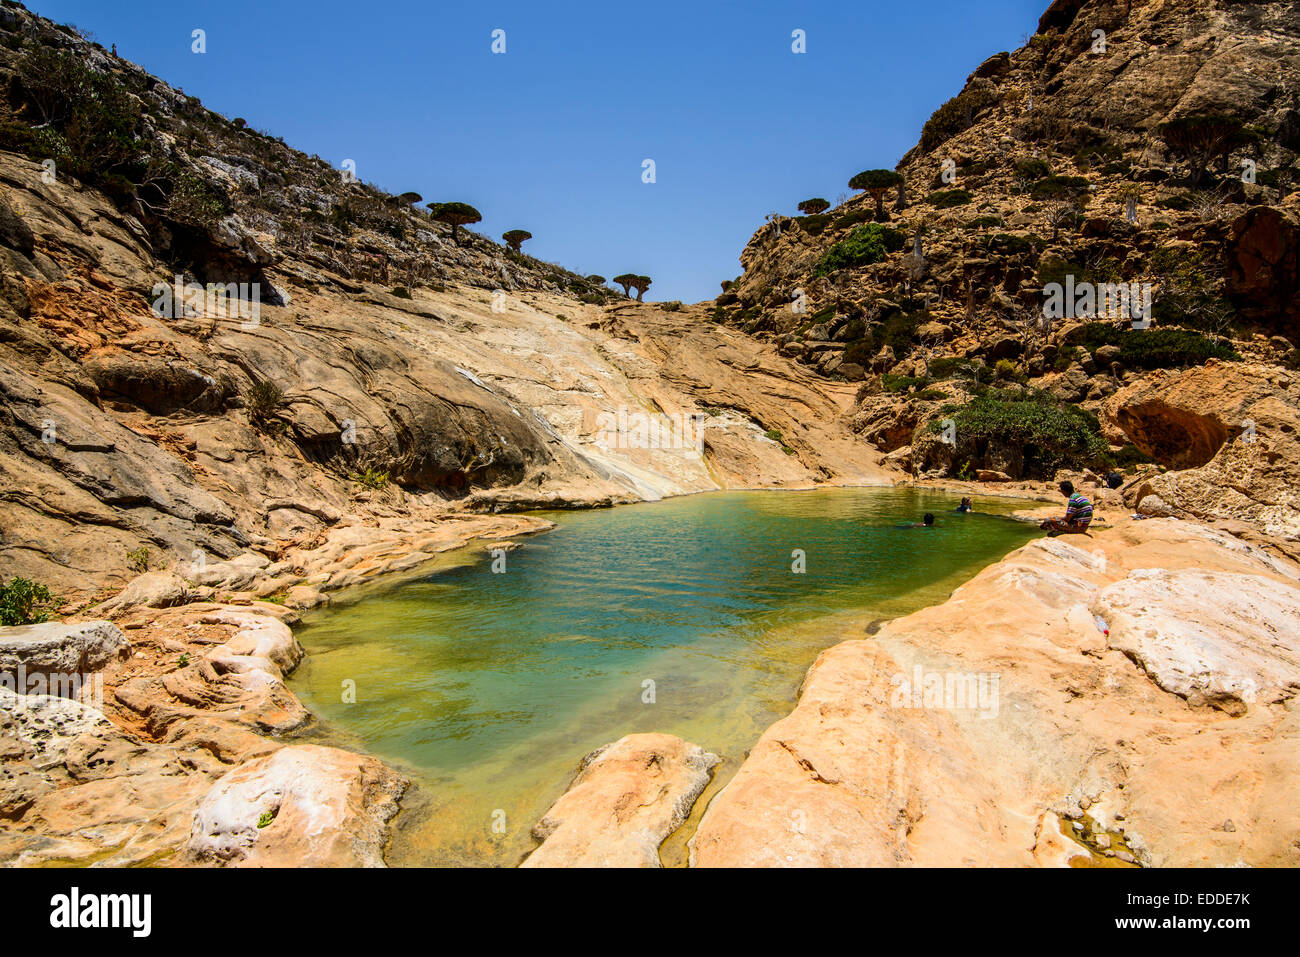 Pond at the coast, Homhil protected area, island of Socotra, Yemen Stock Photo